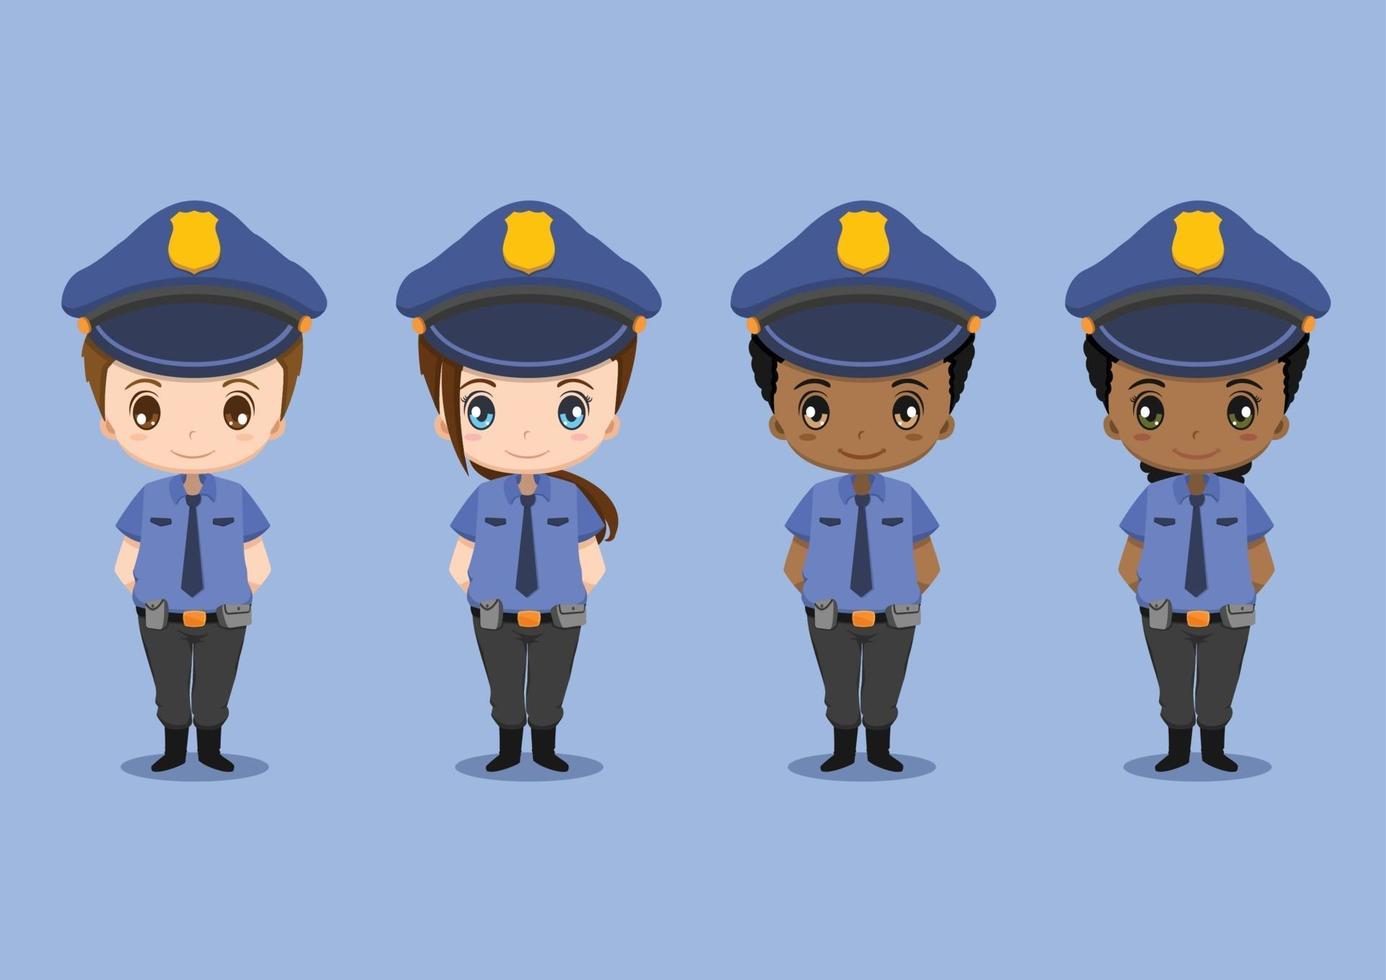 schattige kinderen die politie-uniformen dragen vector